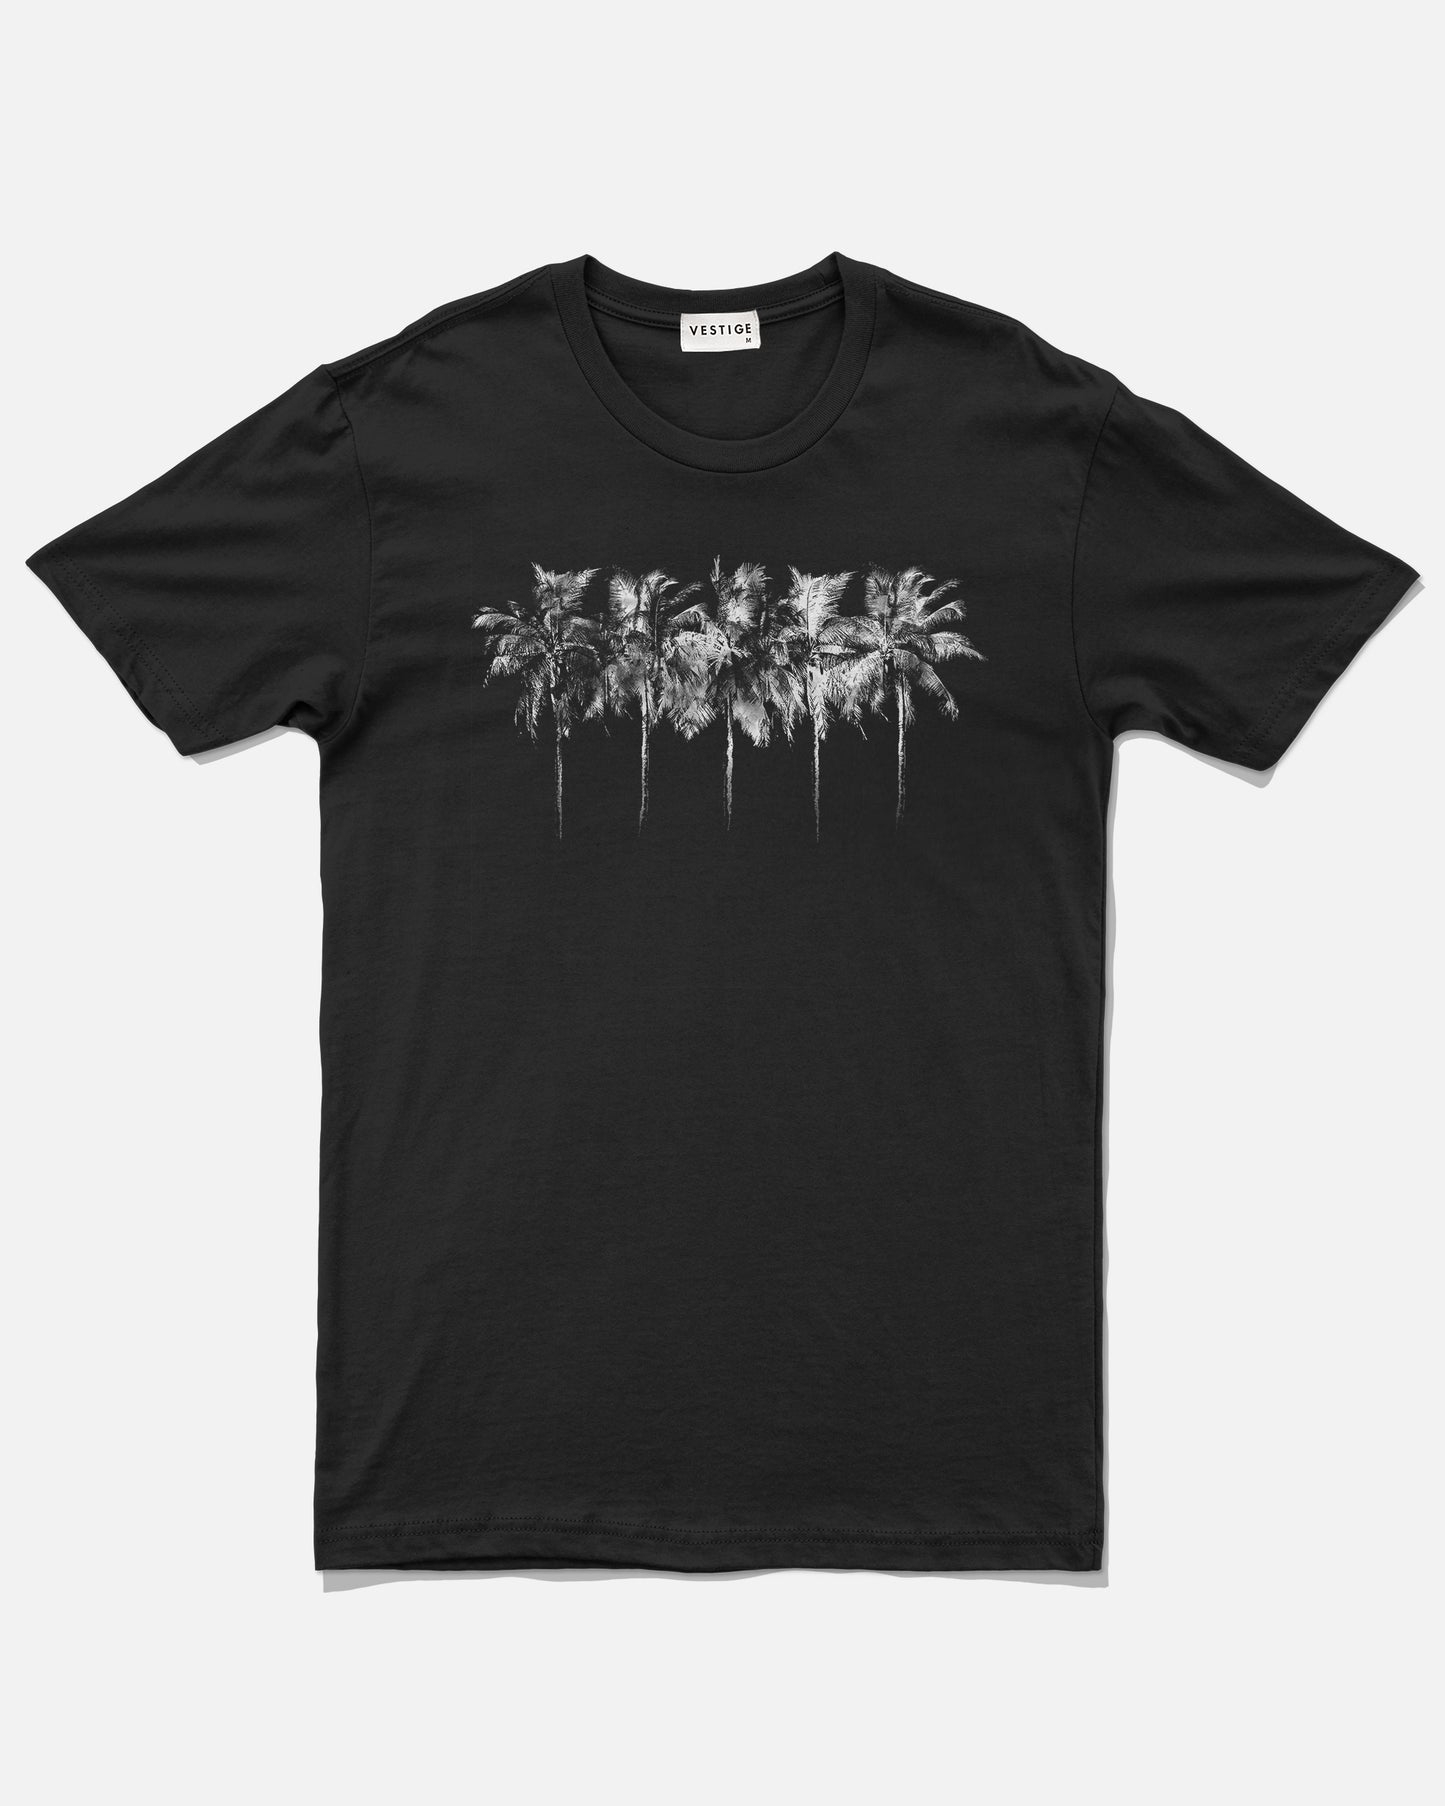 Row Of Palms T-Shirt, Black-VESTIGE